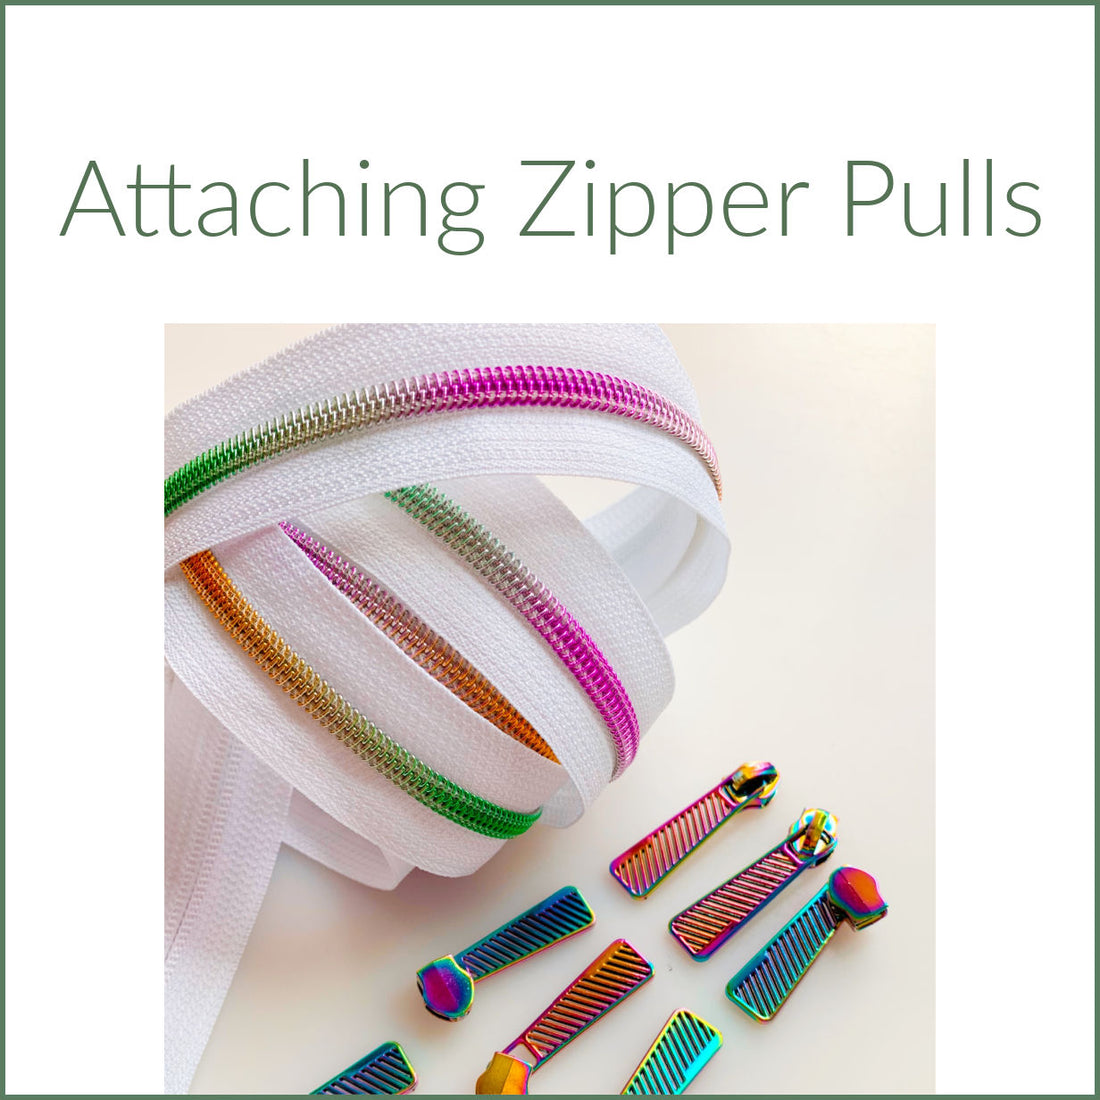 Attaching Zipper Pulls to Zipper tape